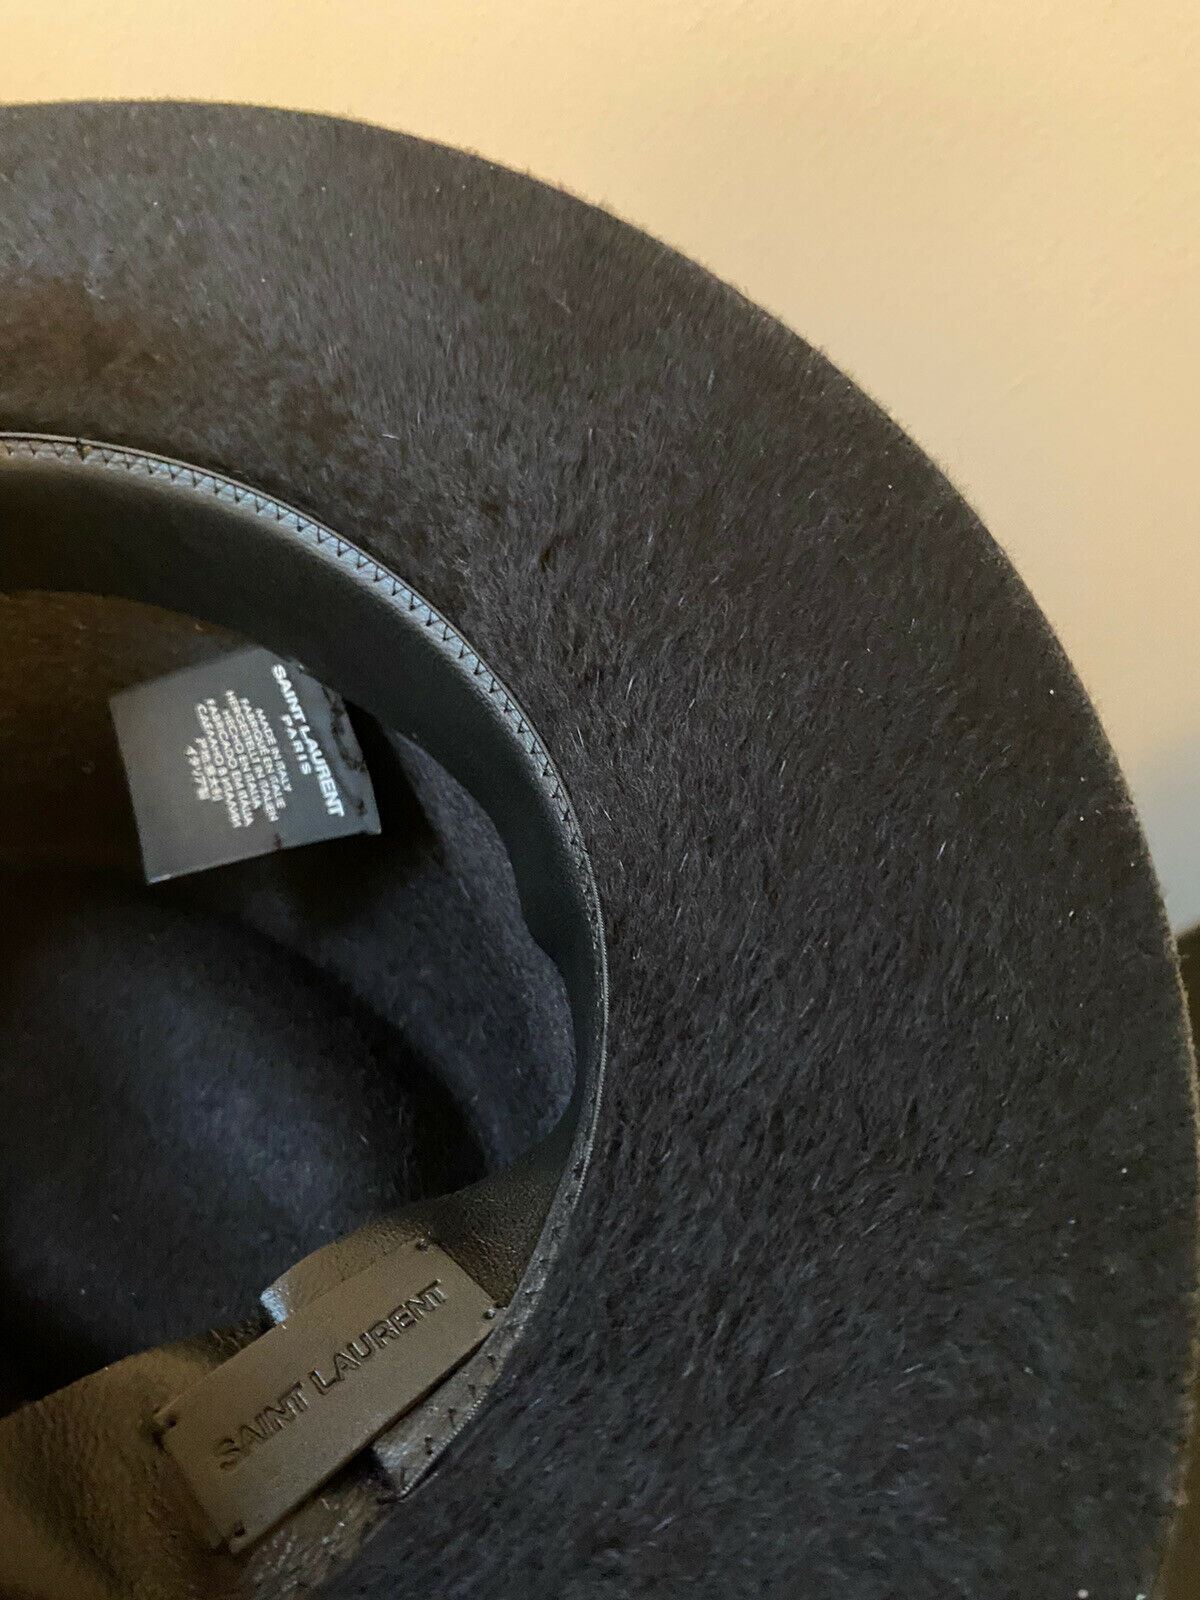 Мужская фетровая шляпа Saint Laurent NWT $995, черная, размер L, Италия